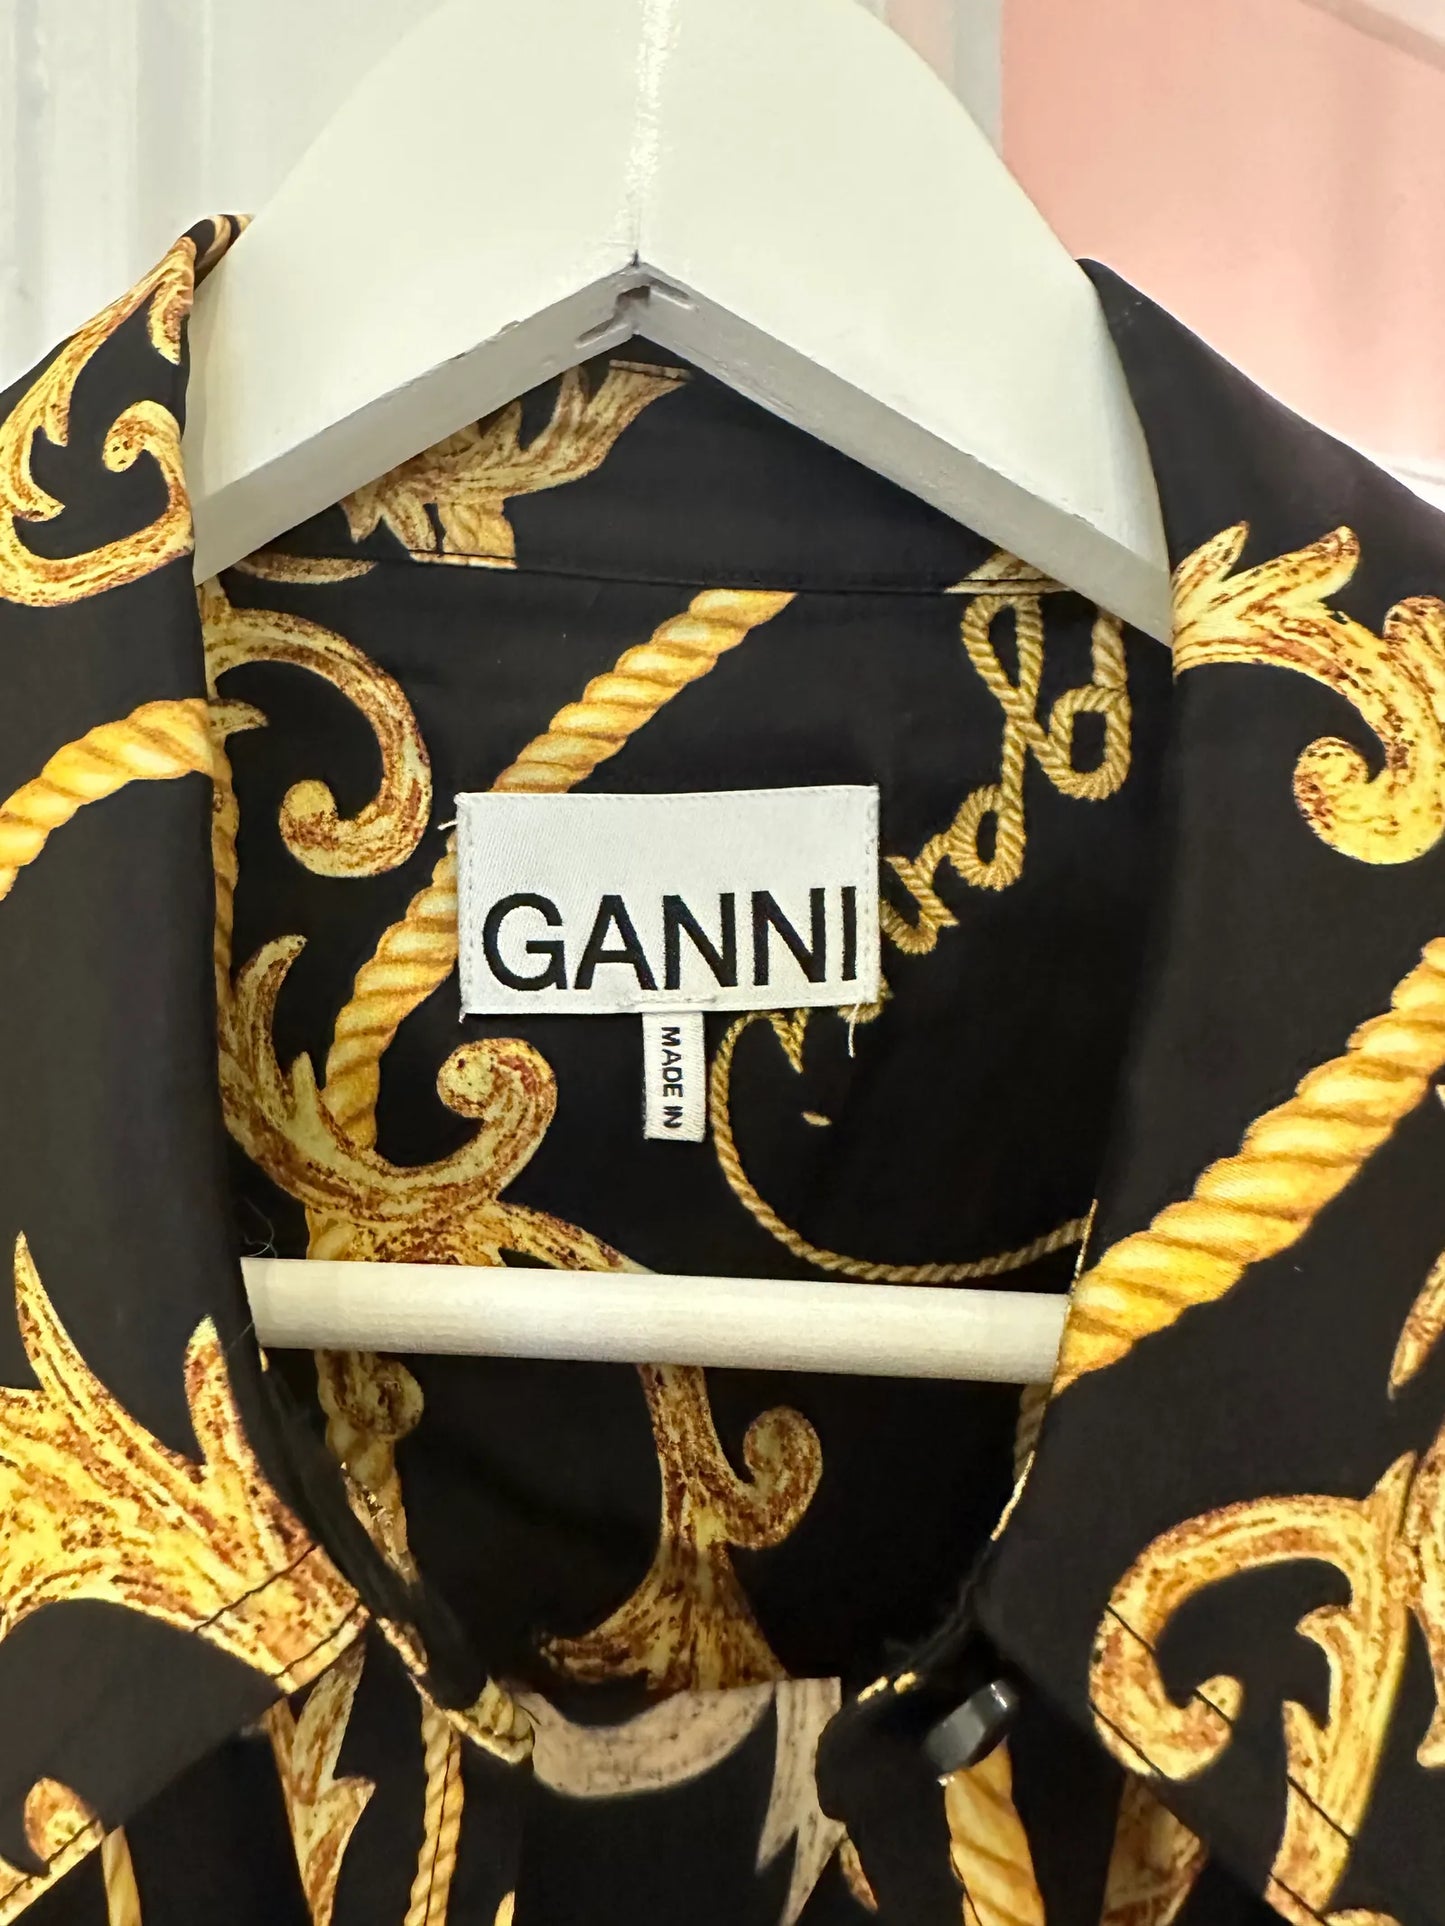 Ganni-sidenklänning